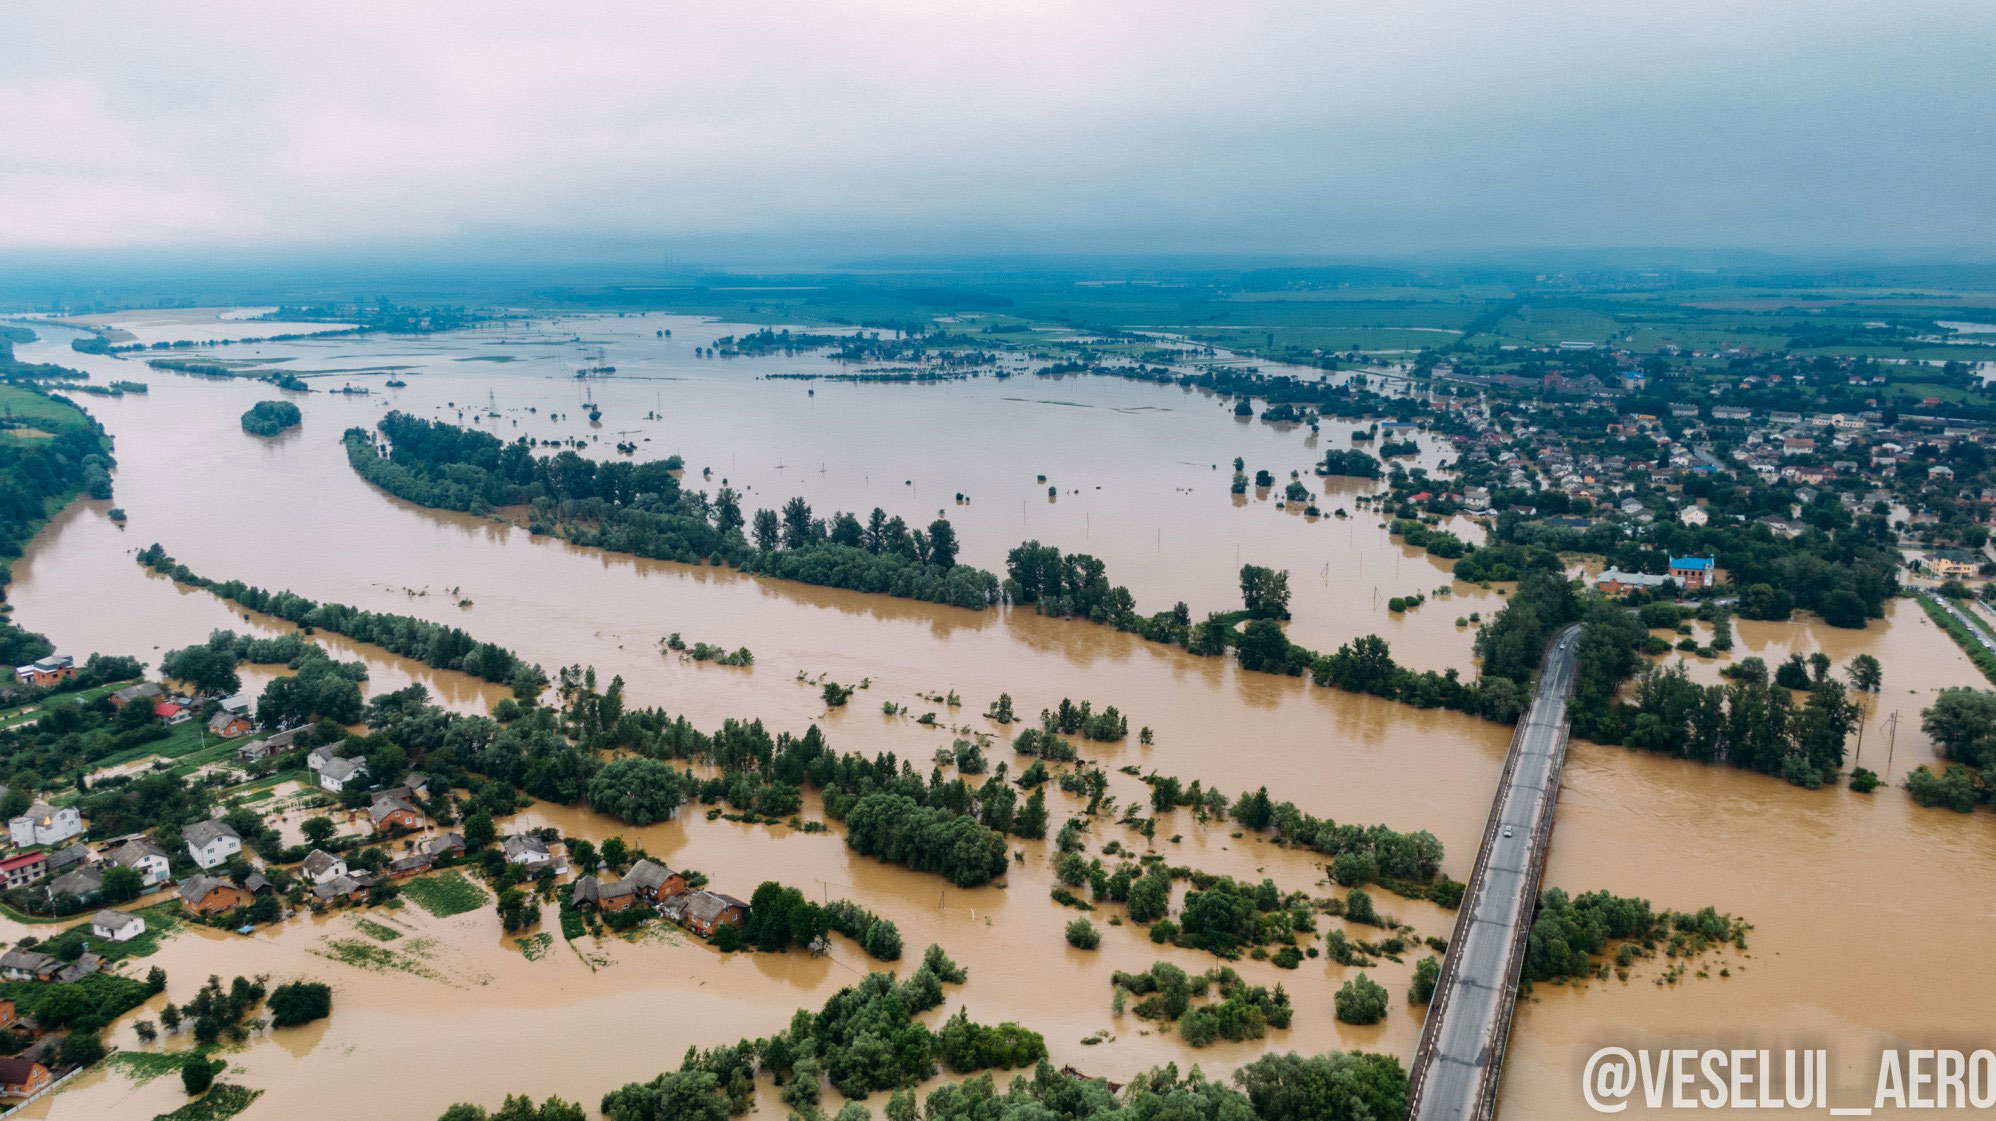 Flooding in Ukraine - We Need Your Help!